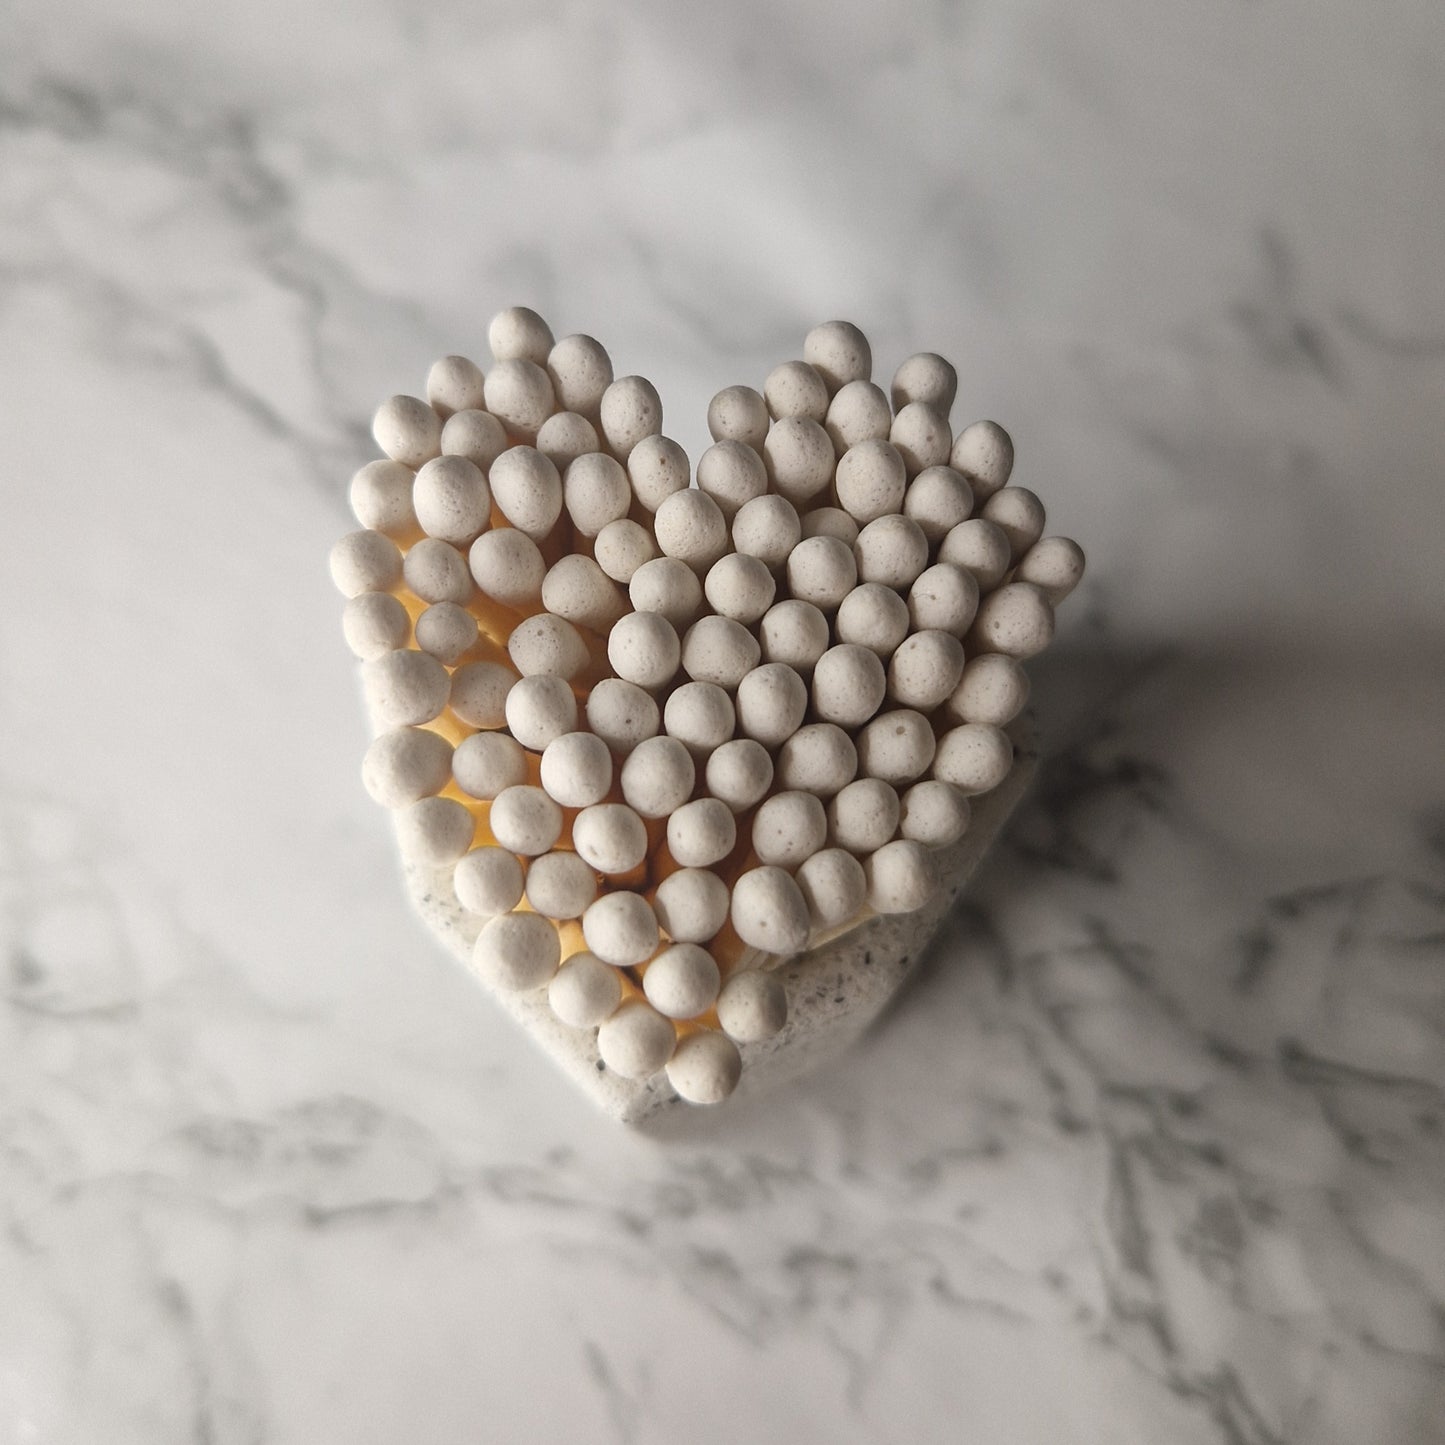 Heart Match Holder Pot filled with matches